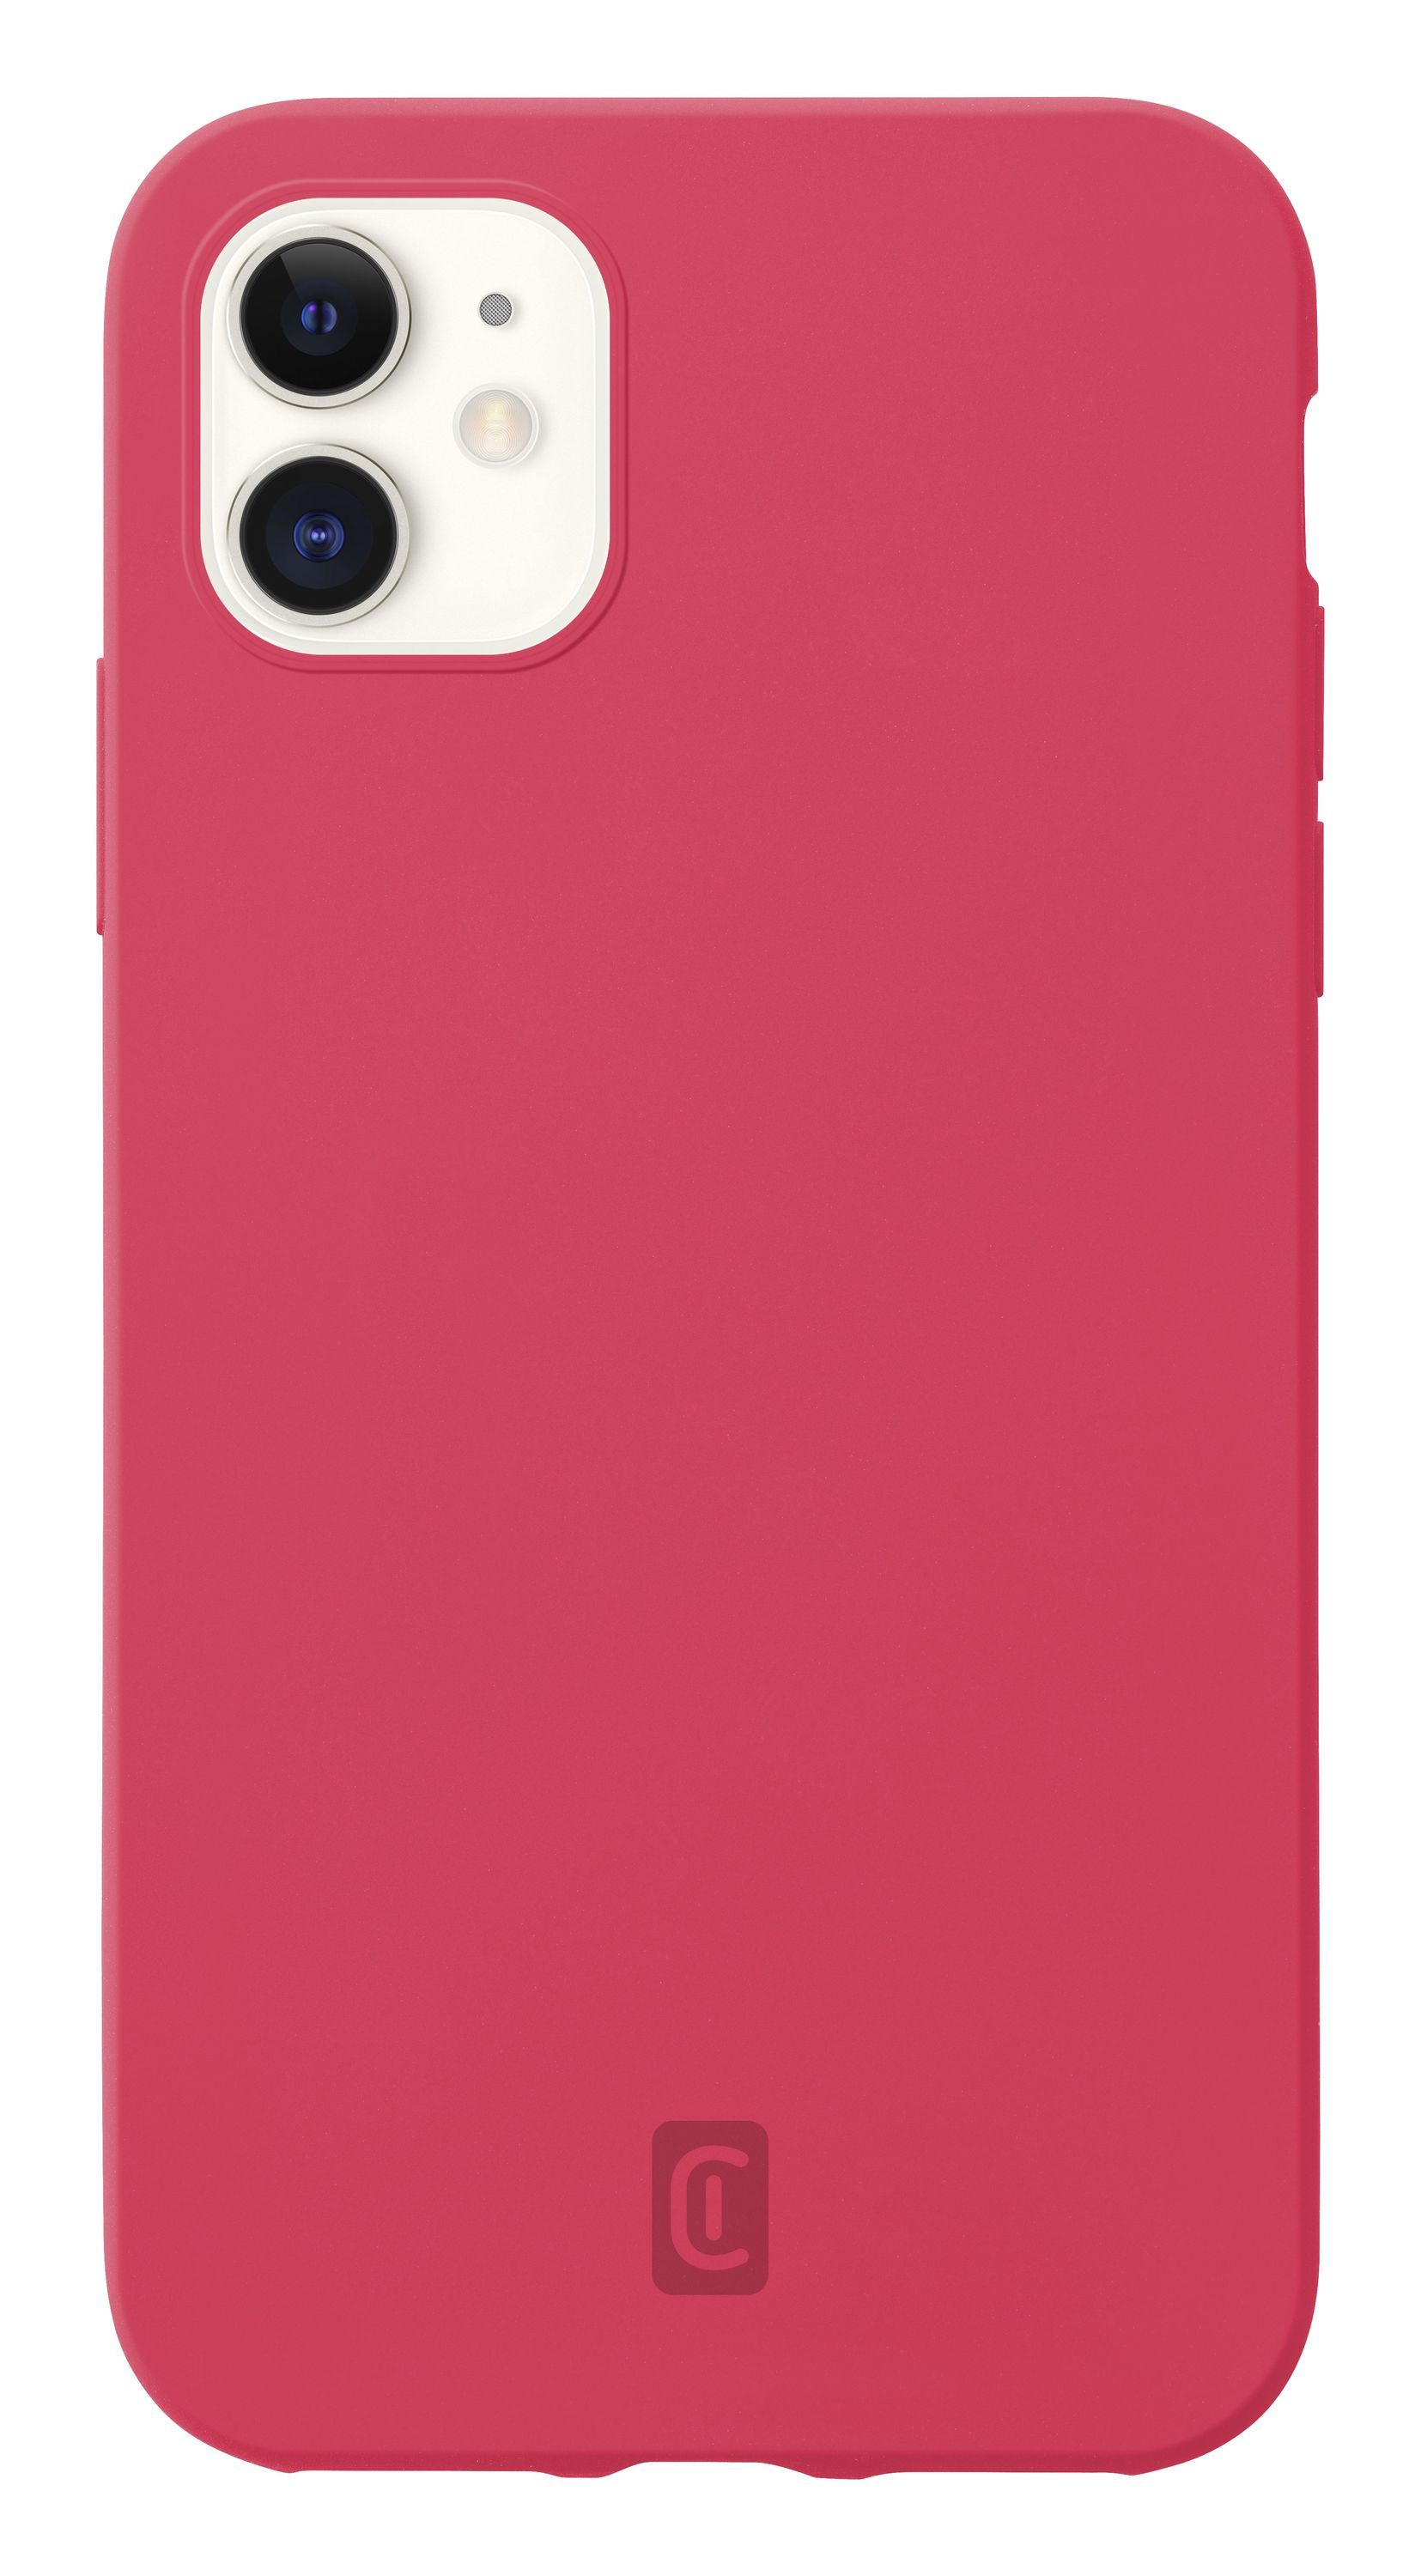 Ochranný silikonový kryt Sensation pro Apple iPhone 12 mini, coral red